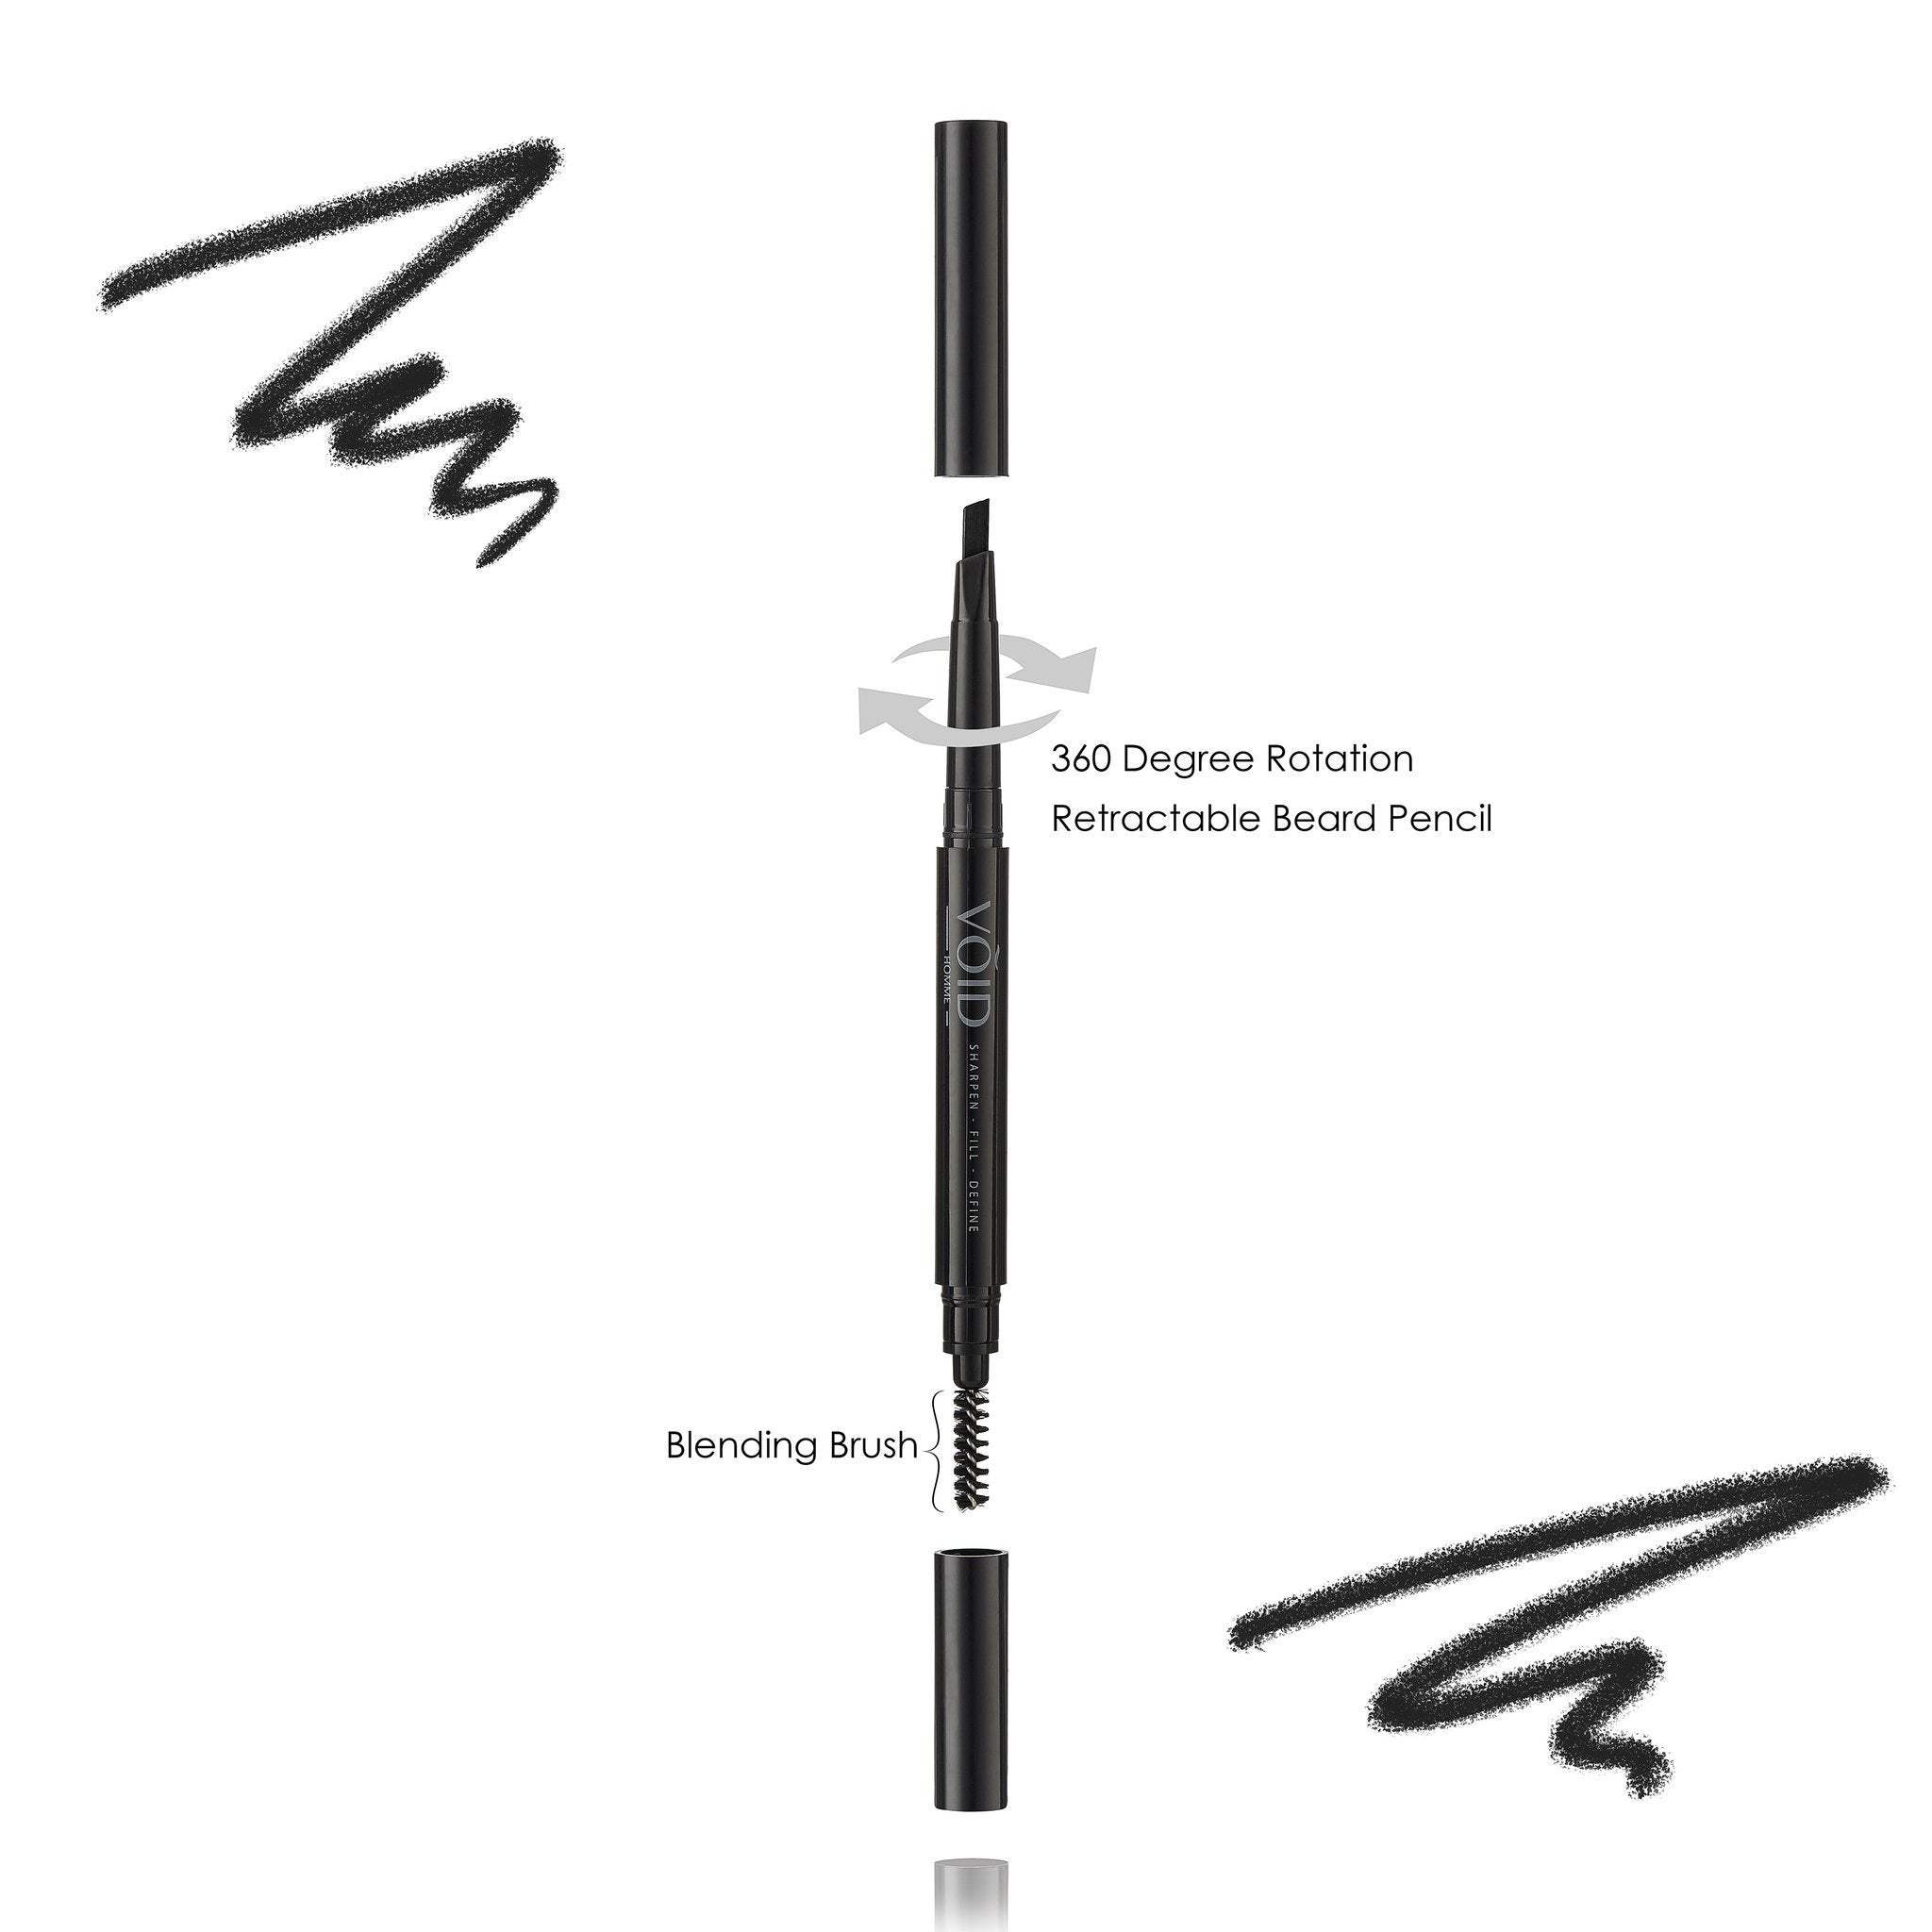 Adjustable 2-Sided Beard Filler Pencil for All Facial Hair